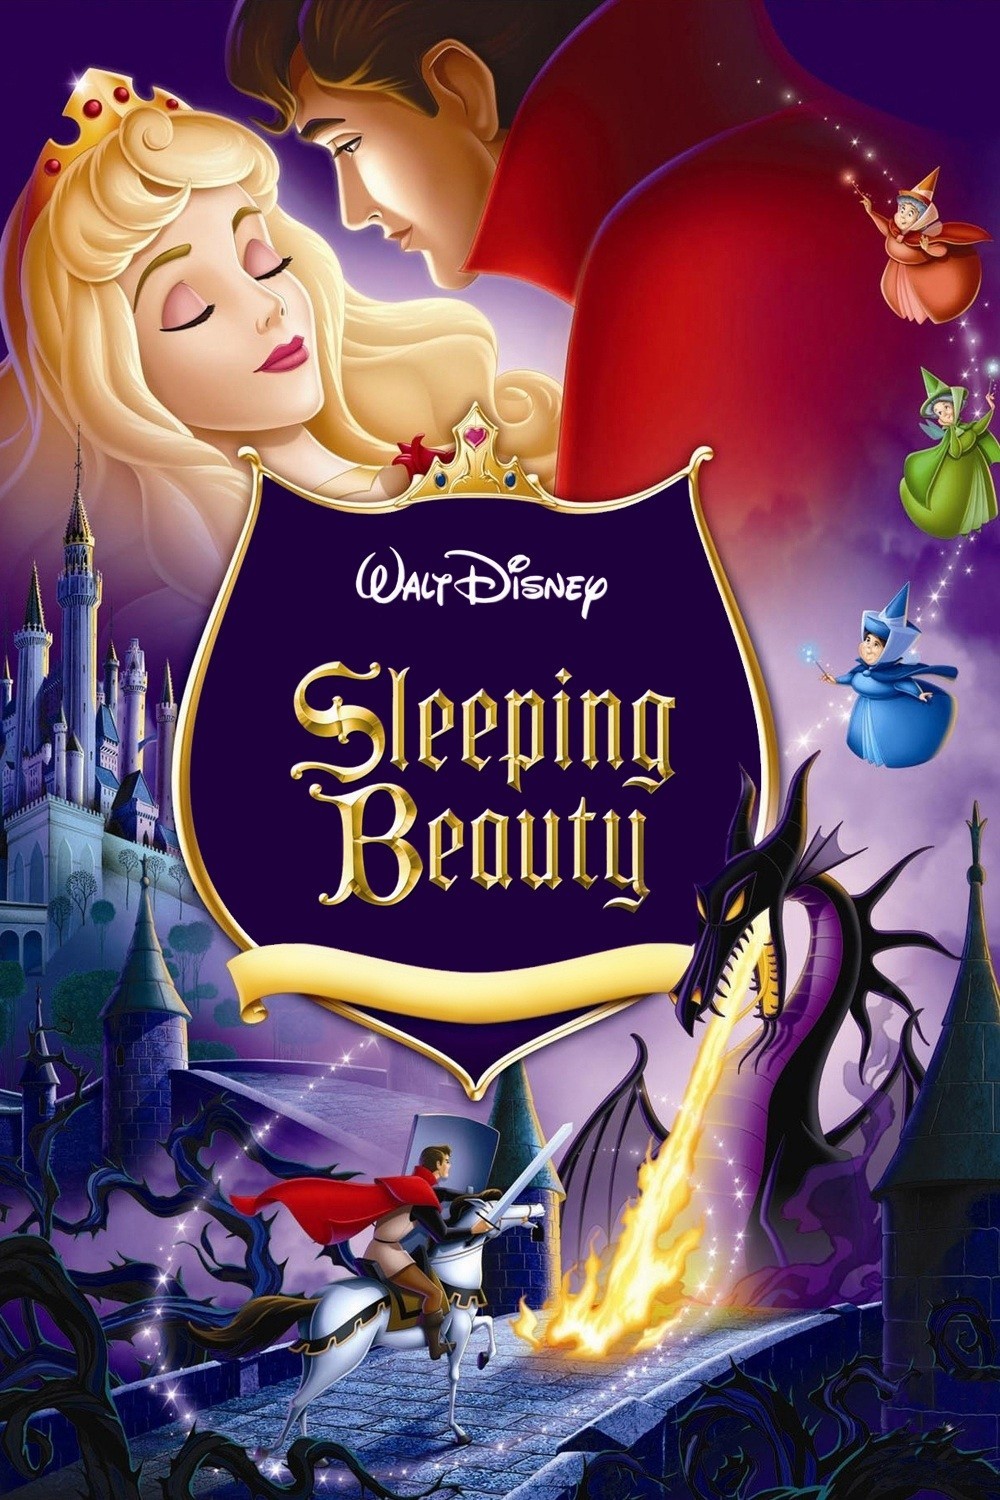 Sleeping beauty disney animation hi-res stock photography and